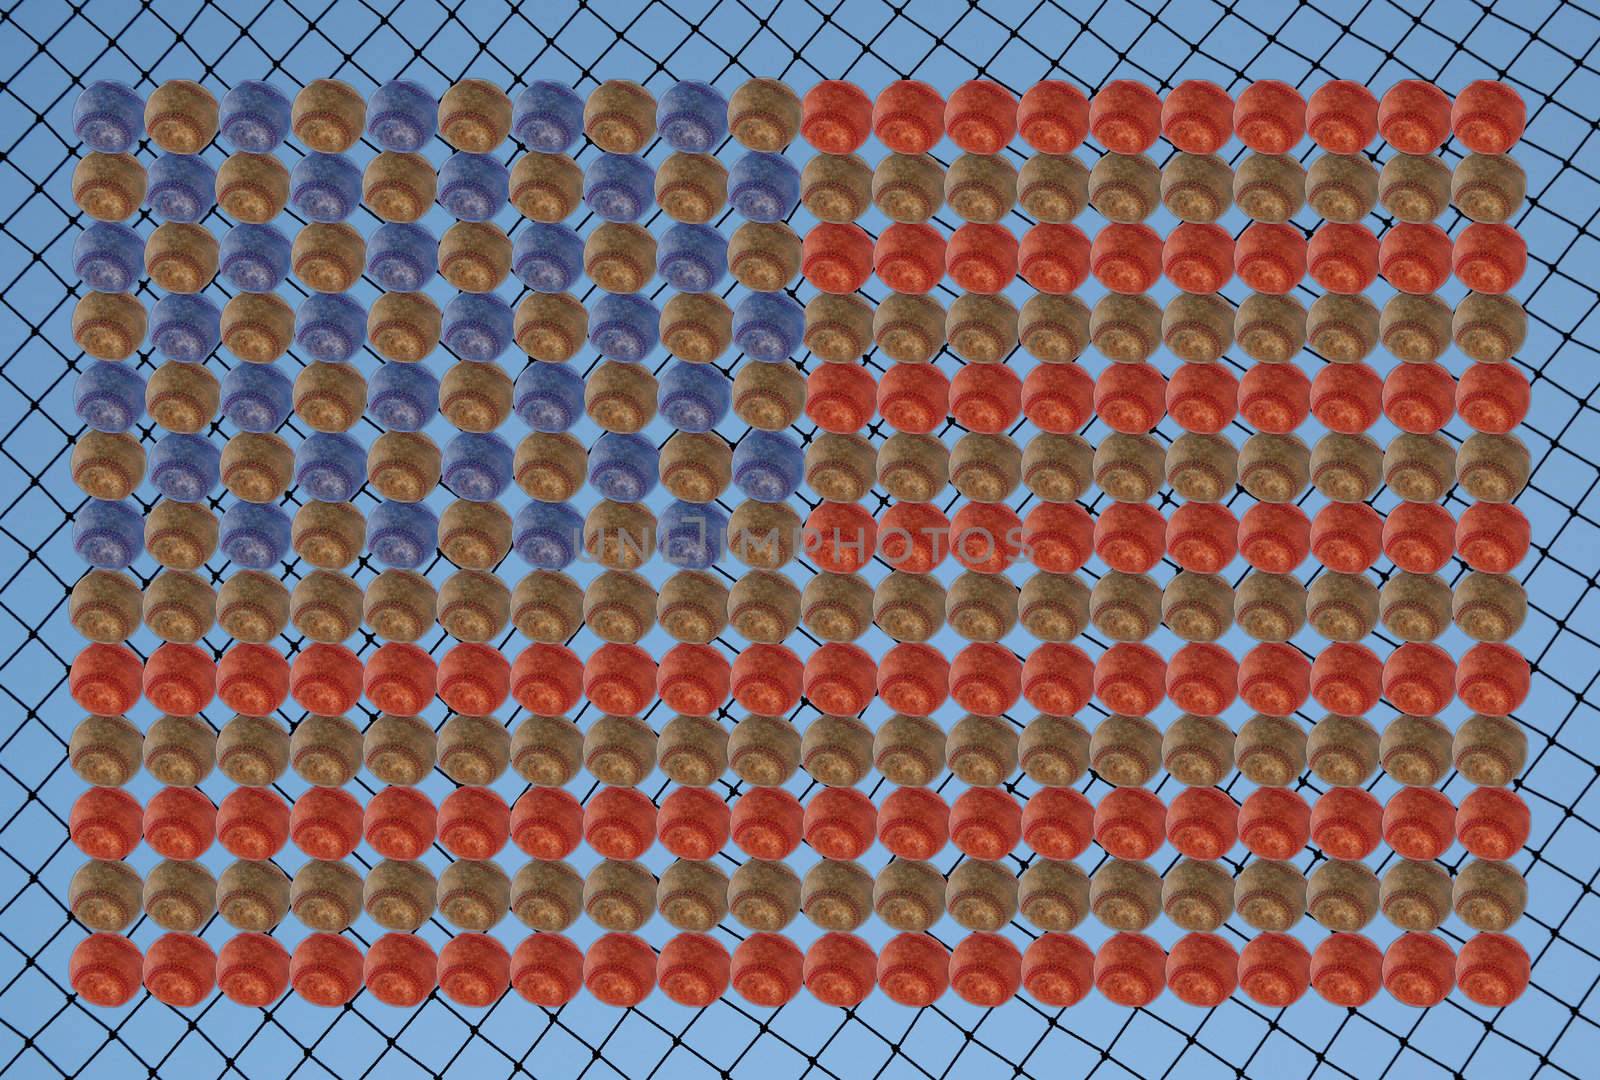 American baseball flag on a netting background